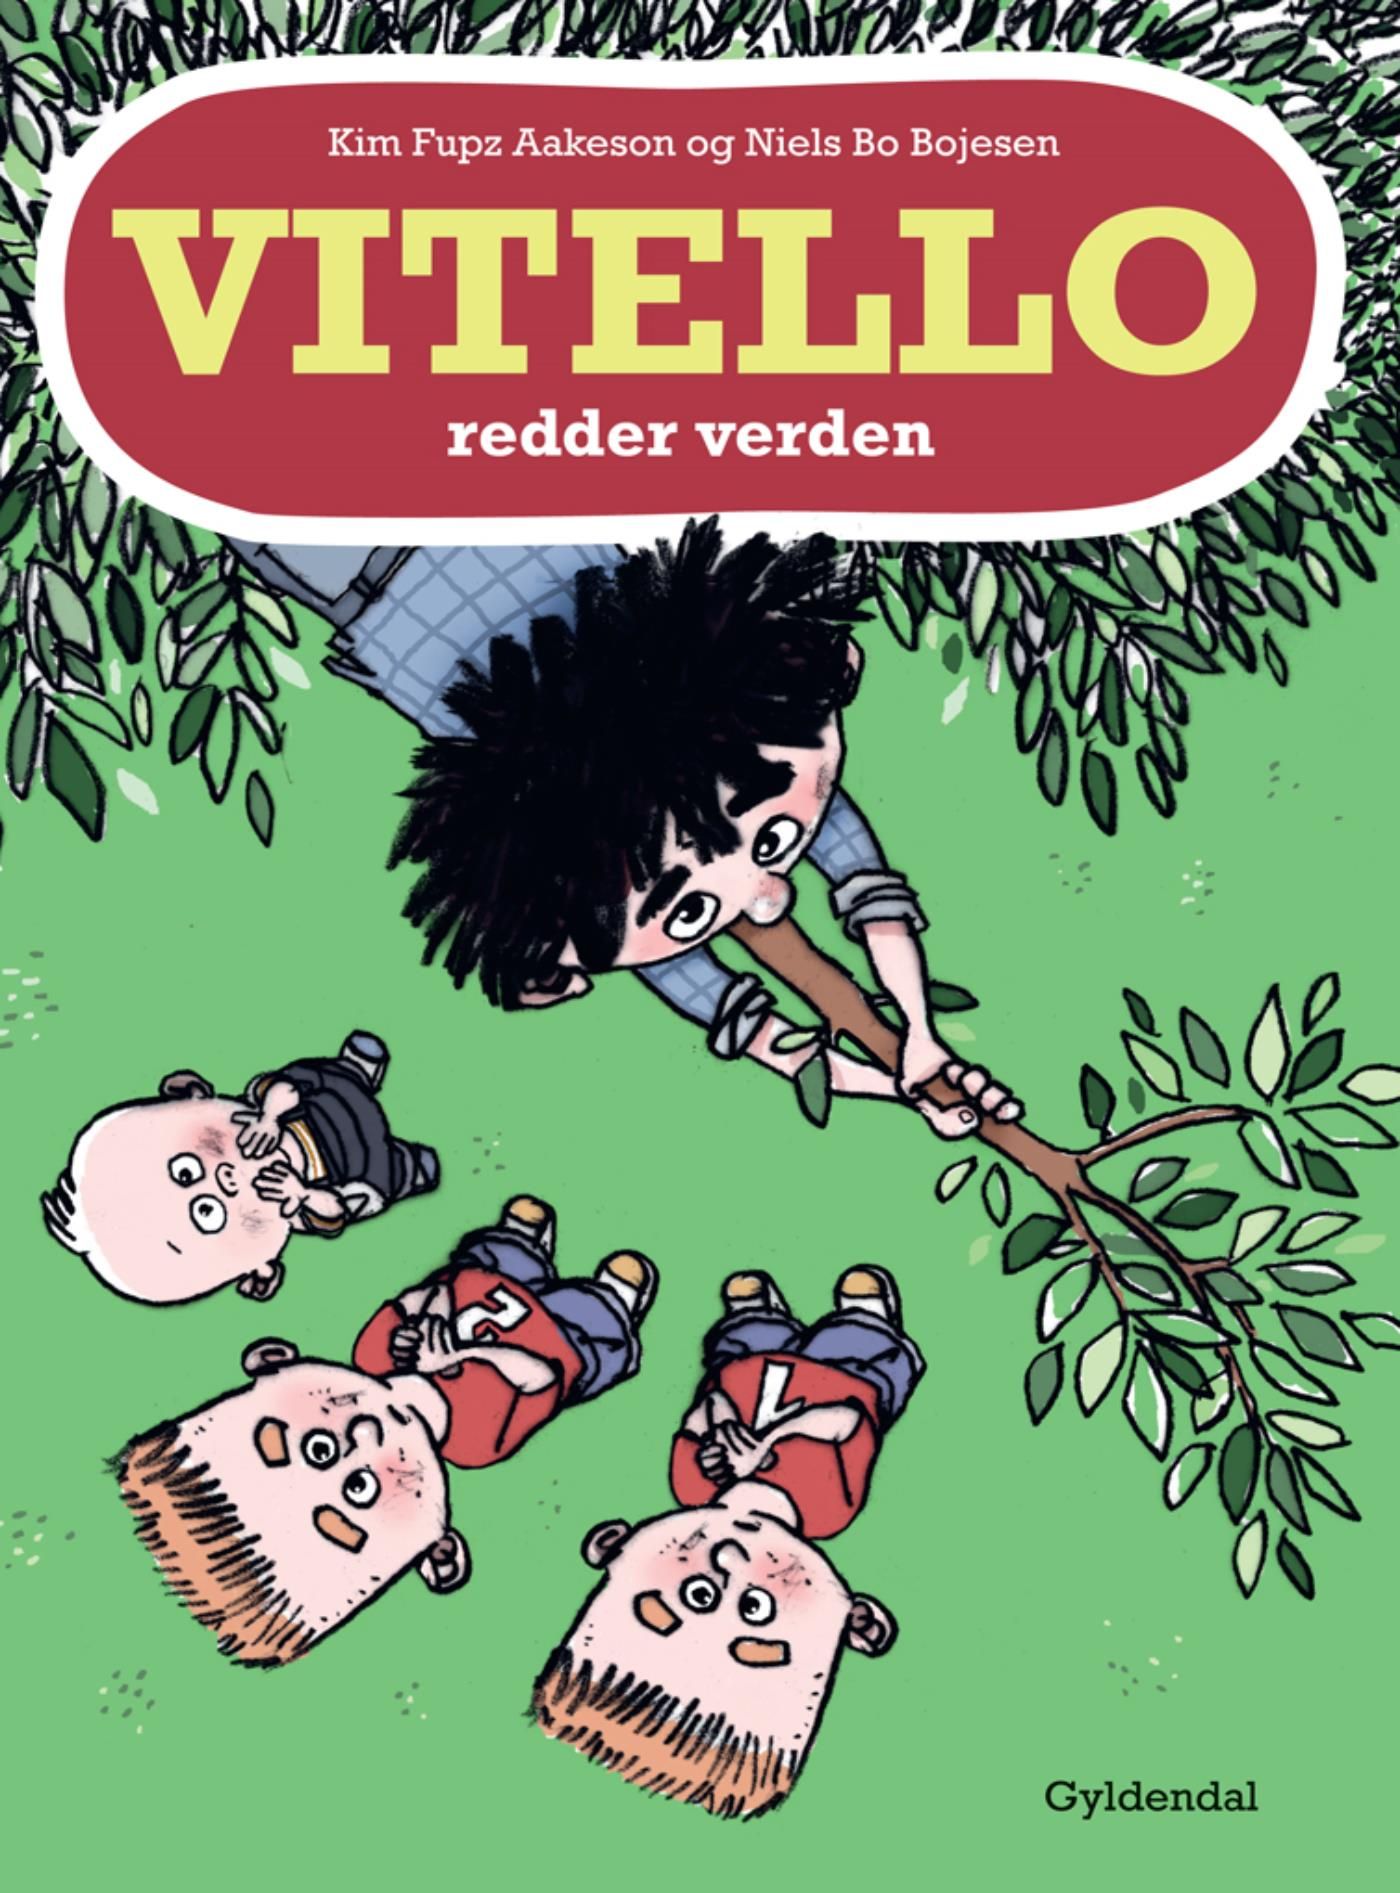 Vitello redder verden Lyt&læs, e-bog af Niels Bo Bojesen, Kim Fupz Aakeson